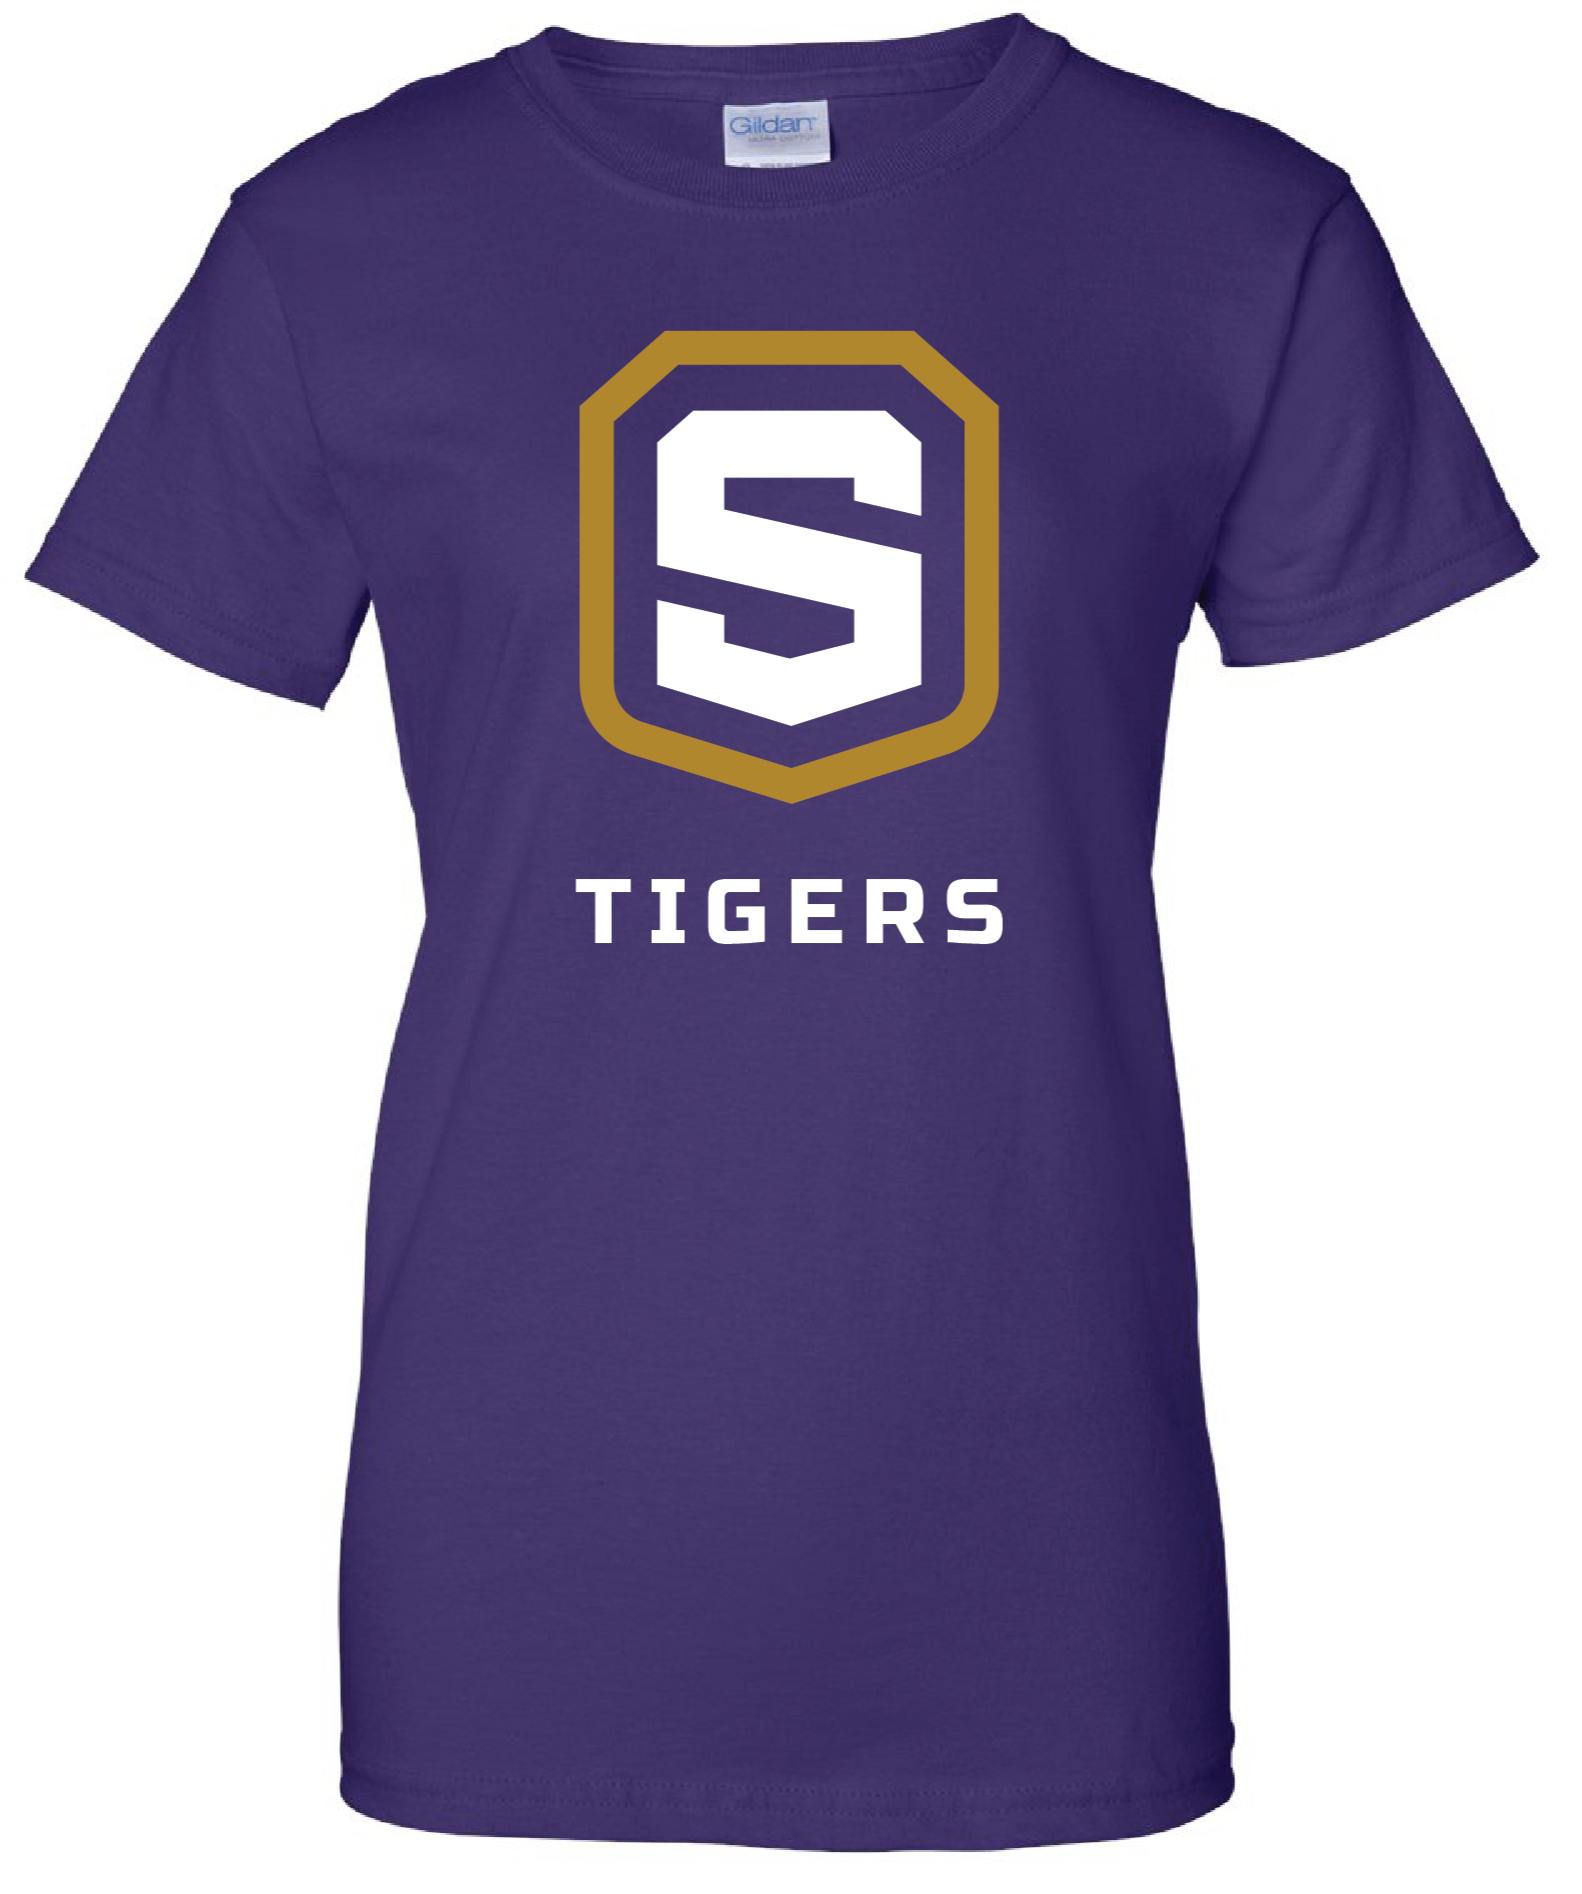 Women's Purple Cotton Short Sleeve T-Shirt | Tigers Shield